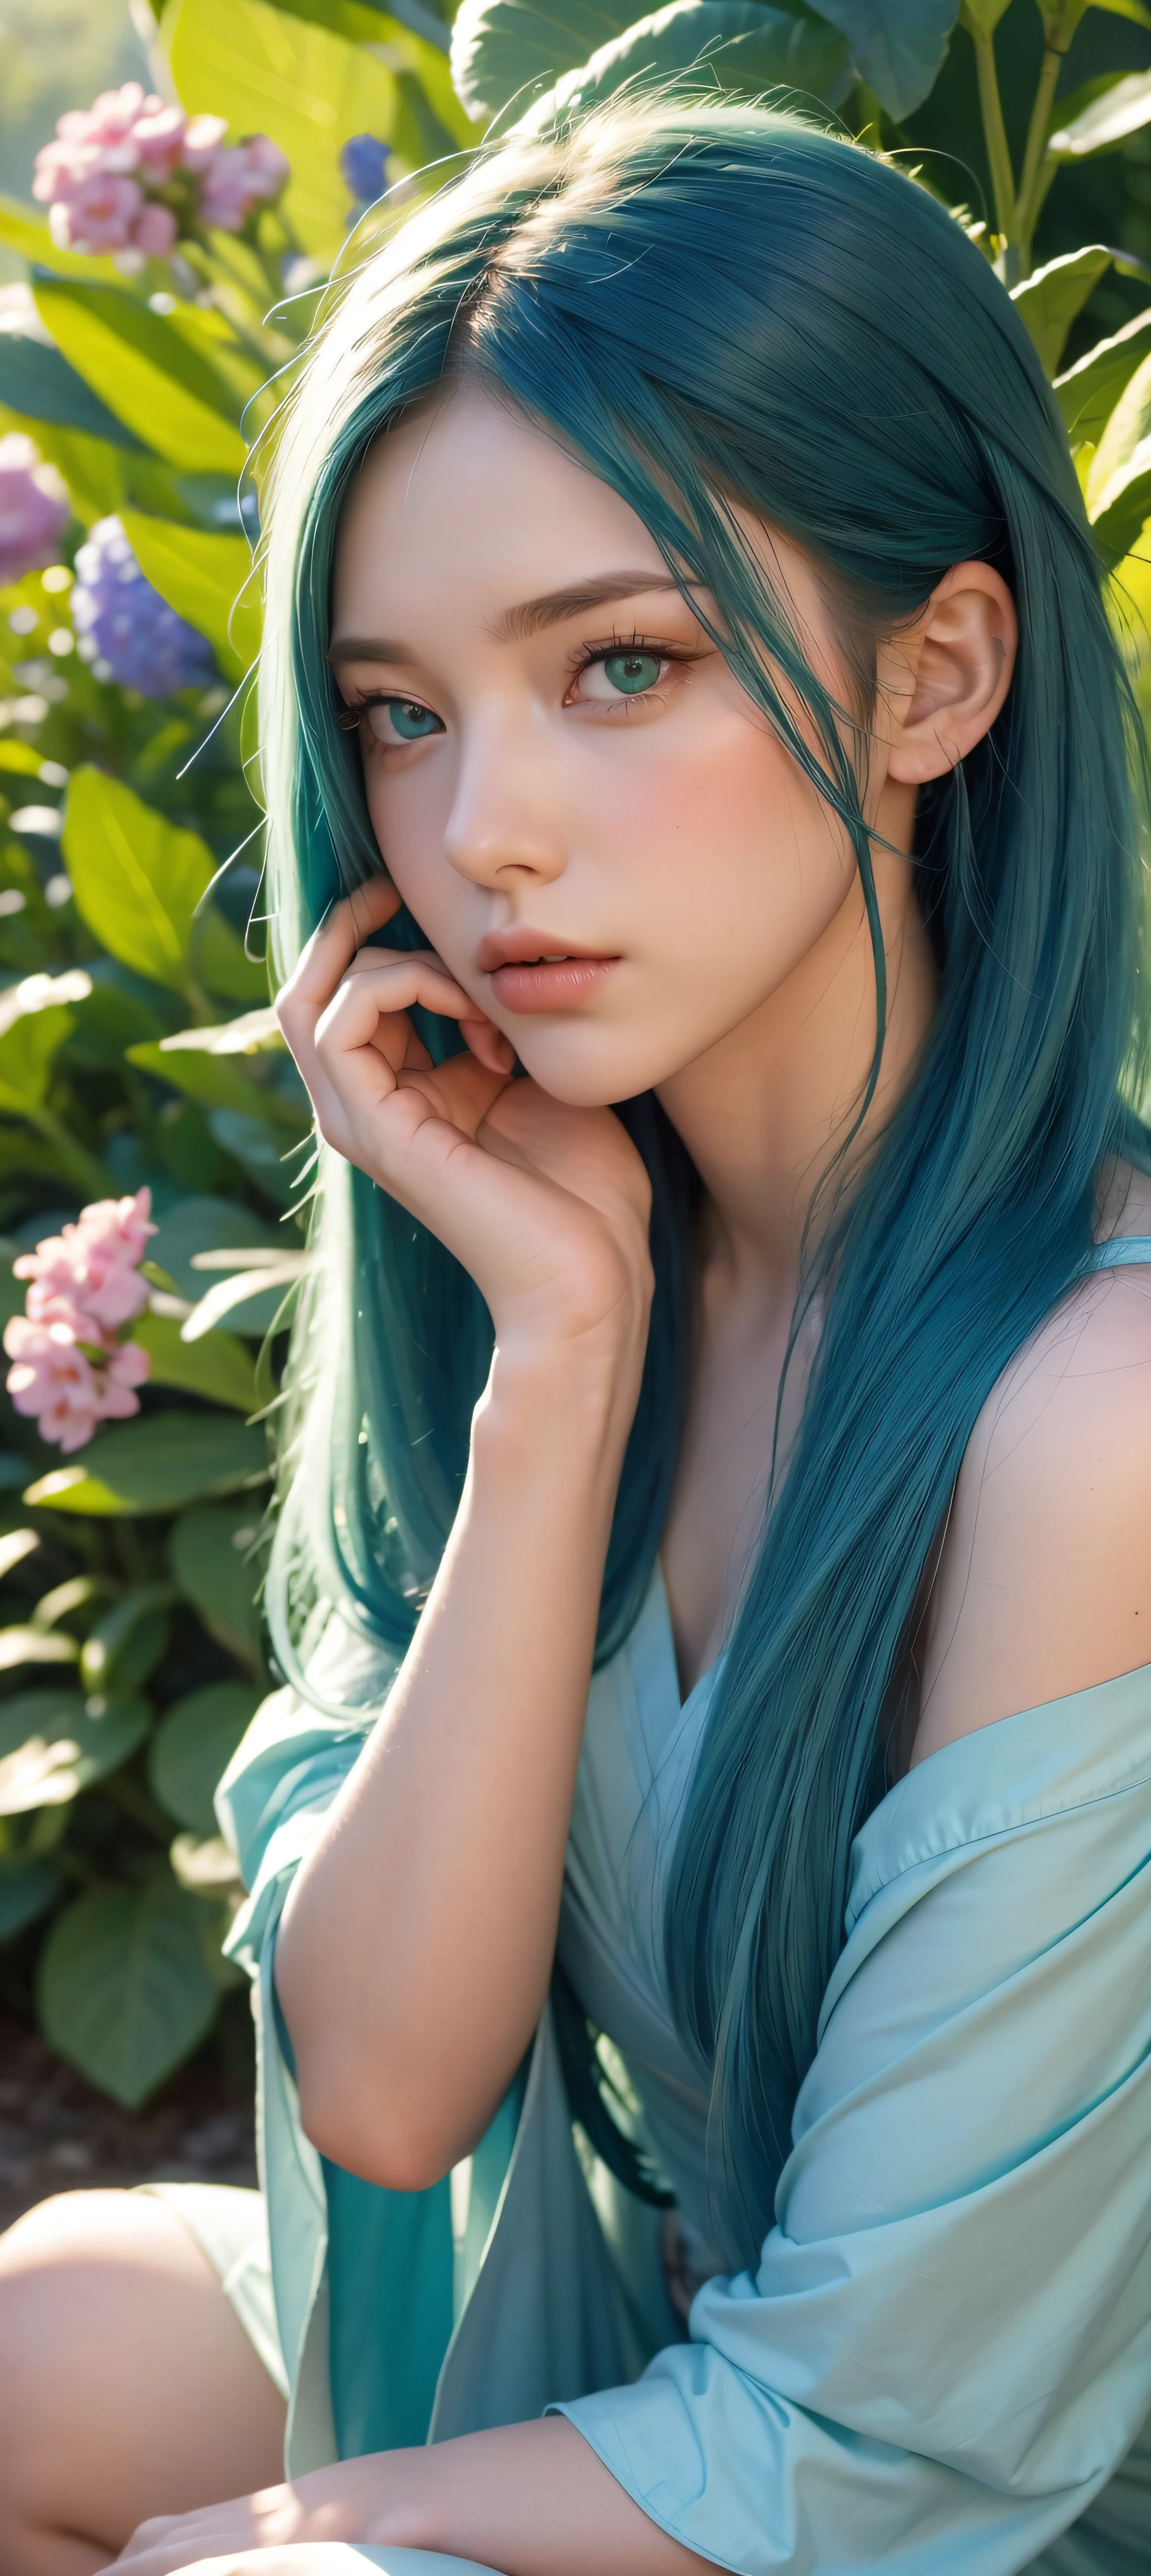 8K, 生的, (傑作, 最好的品質),1 個長著青色藍色頭髮的女孩坐在綠色植物和鮮花的田野裡, 細緻的綠色眼睛, 她的手放在下巴下面, 溫暖的燈光, 美麗的紅色連身裙, 美麗的前景